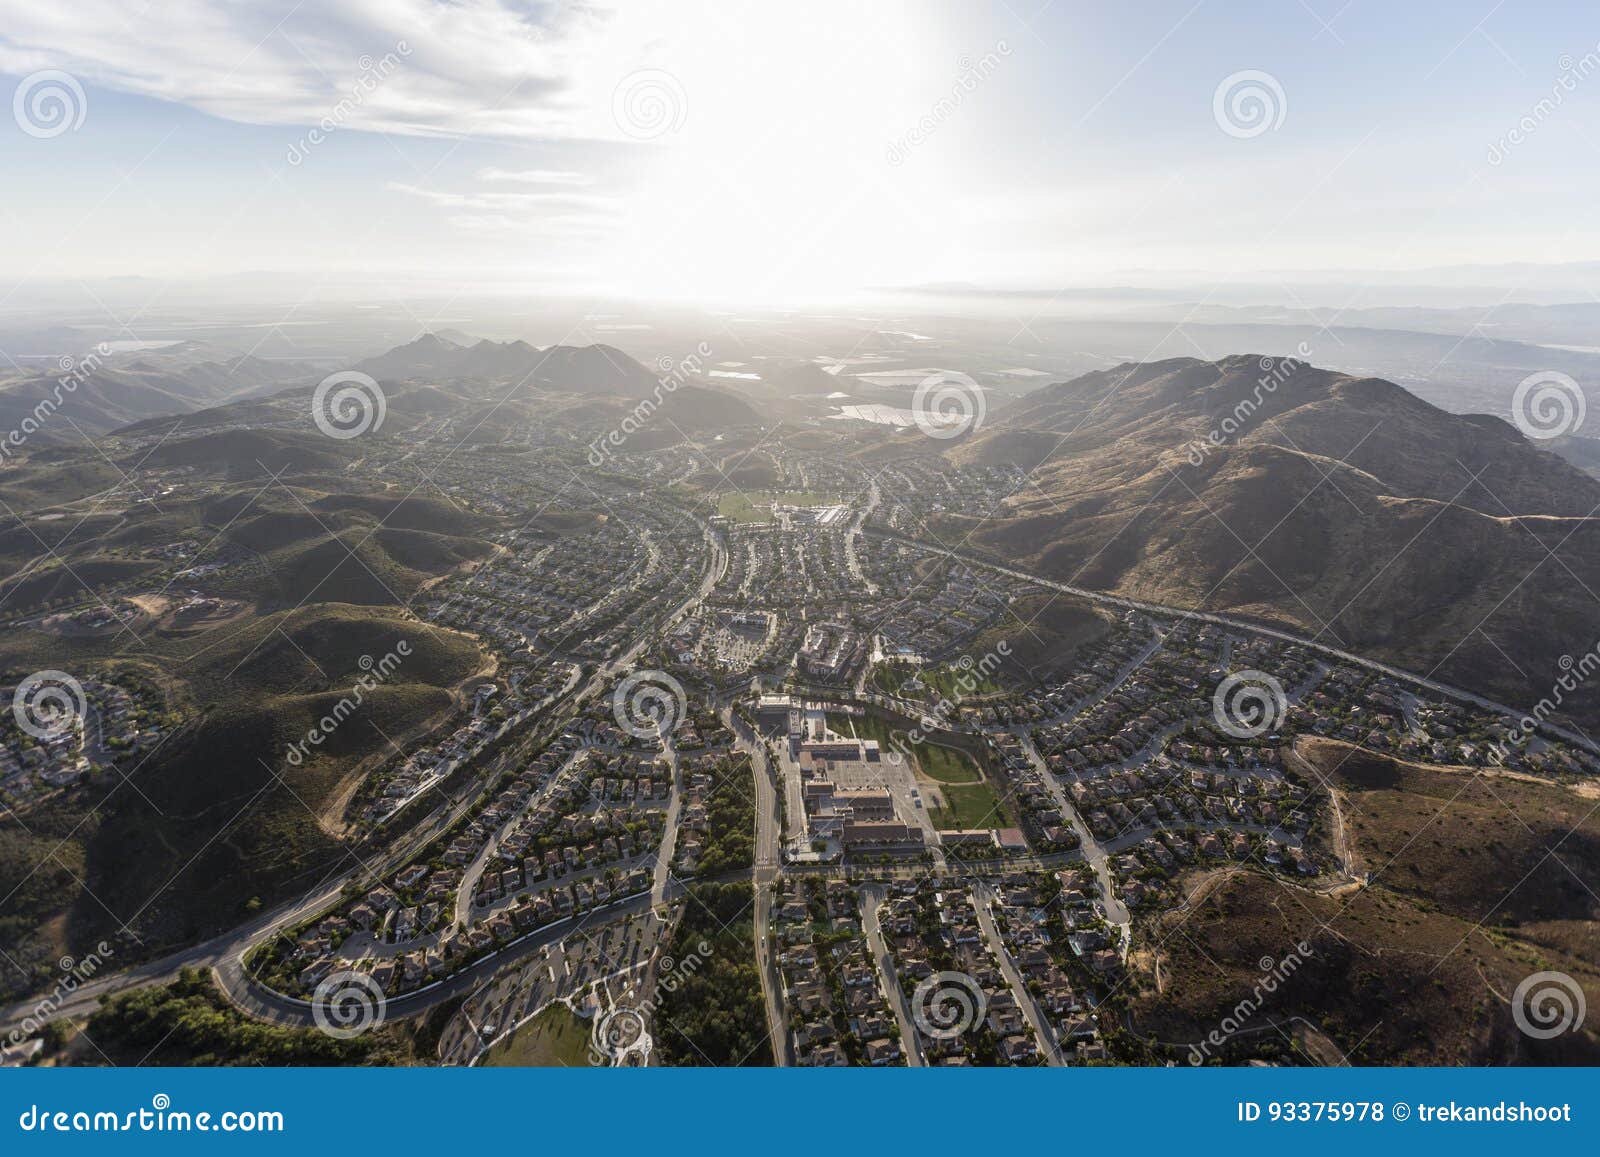 Sherman Oaks and Studio City Aerial Los Angeles California